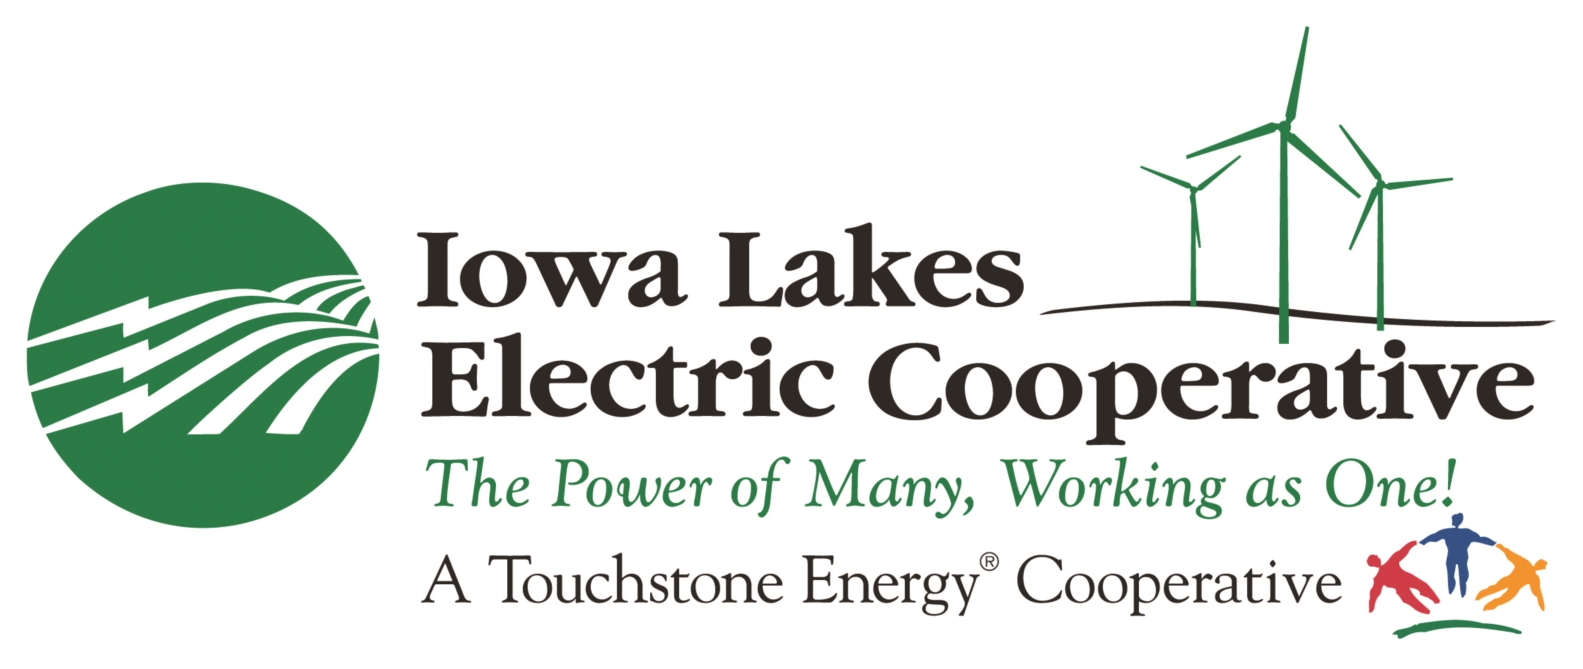 Iowa Lakes Electric Cooperative Company Logo